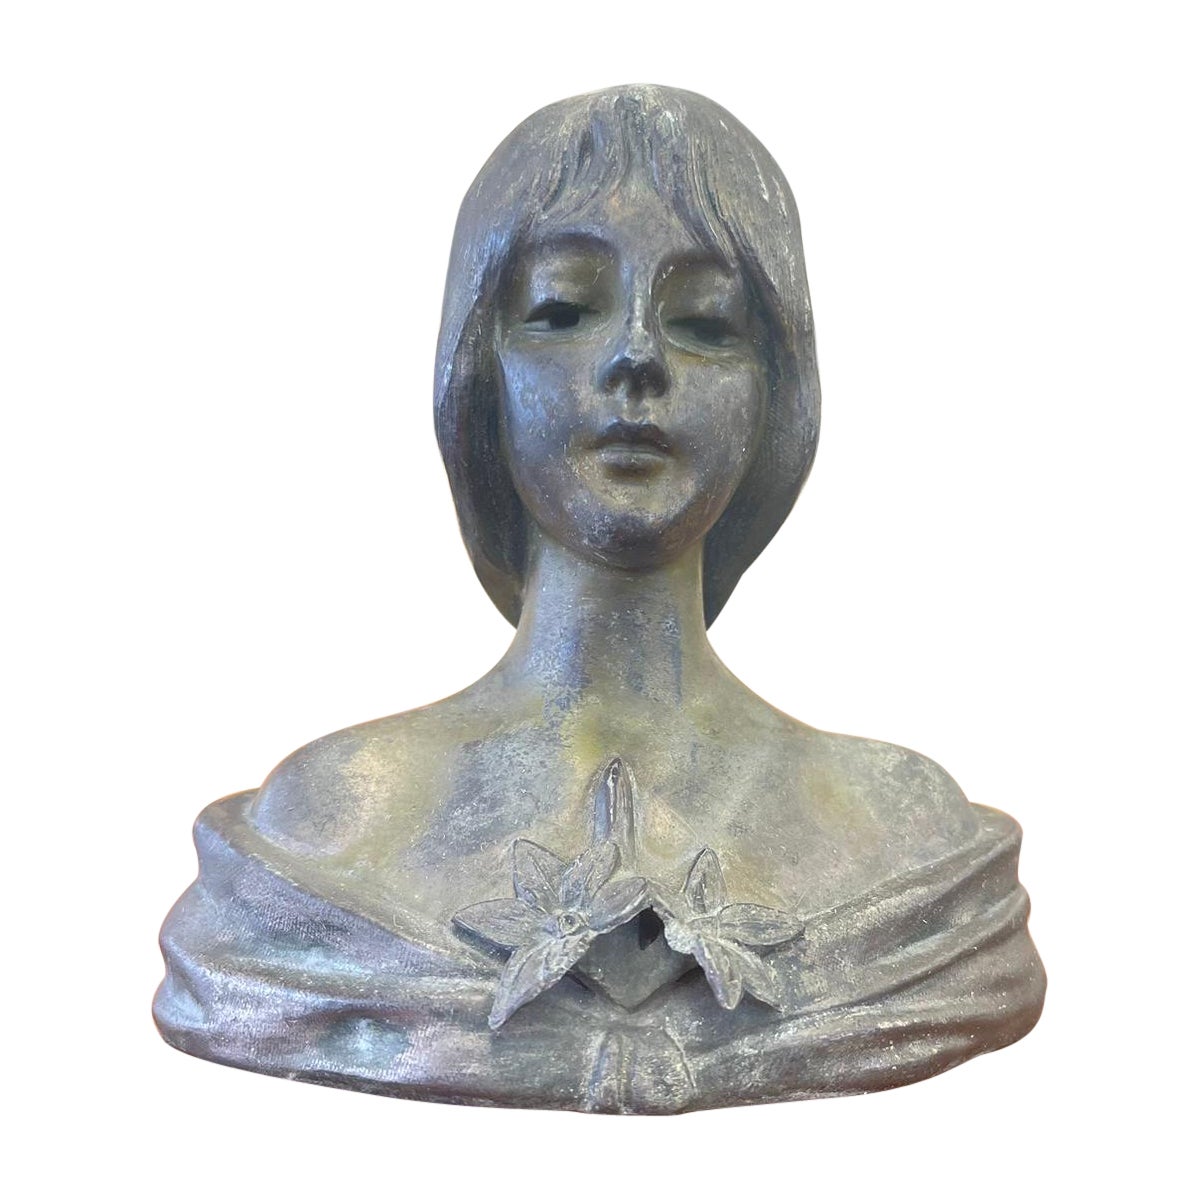 Vintage Figurine Bronze Female Sculpture With Floral Details.